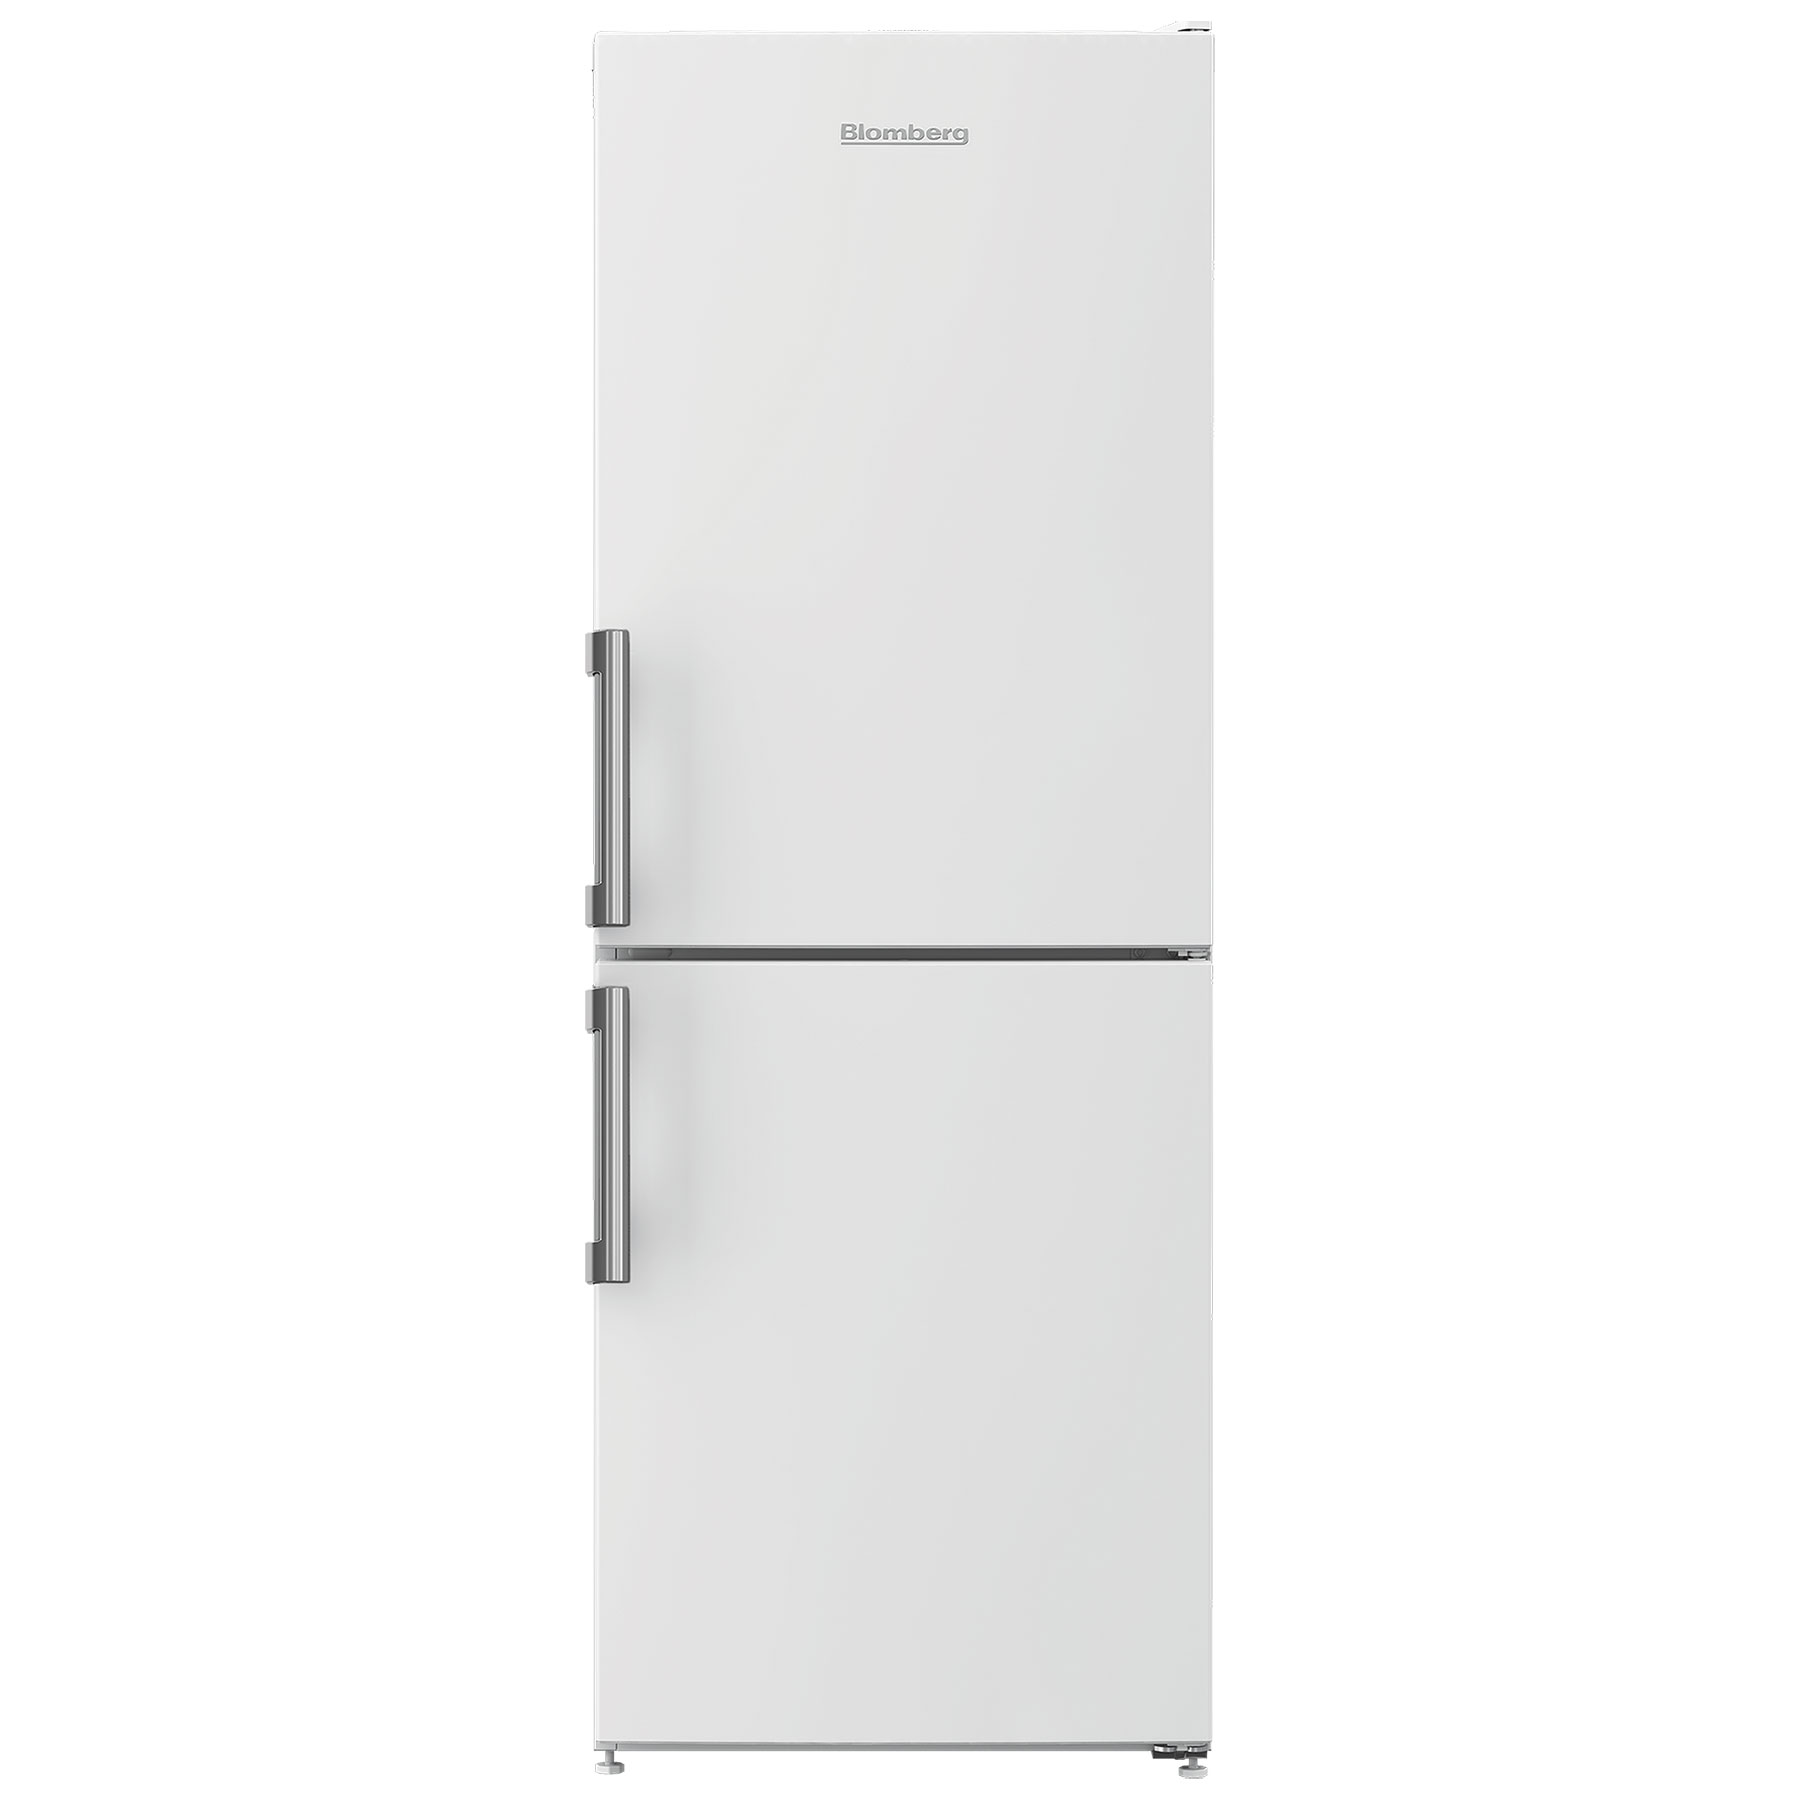 Blomberg KGM4524 54cm Frost Free Fridge Freezer in White 1 53m E